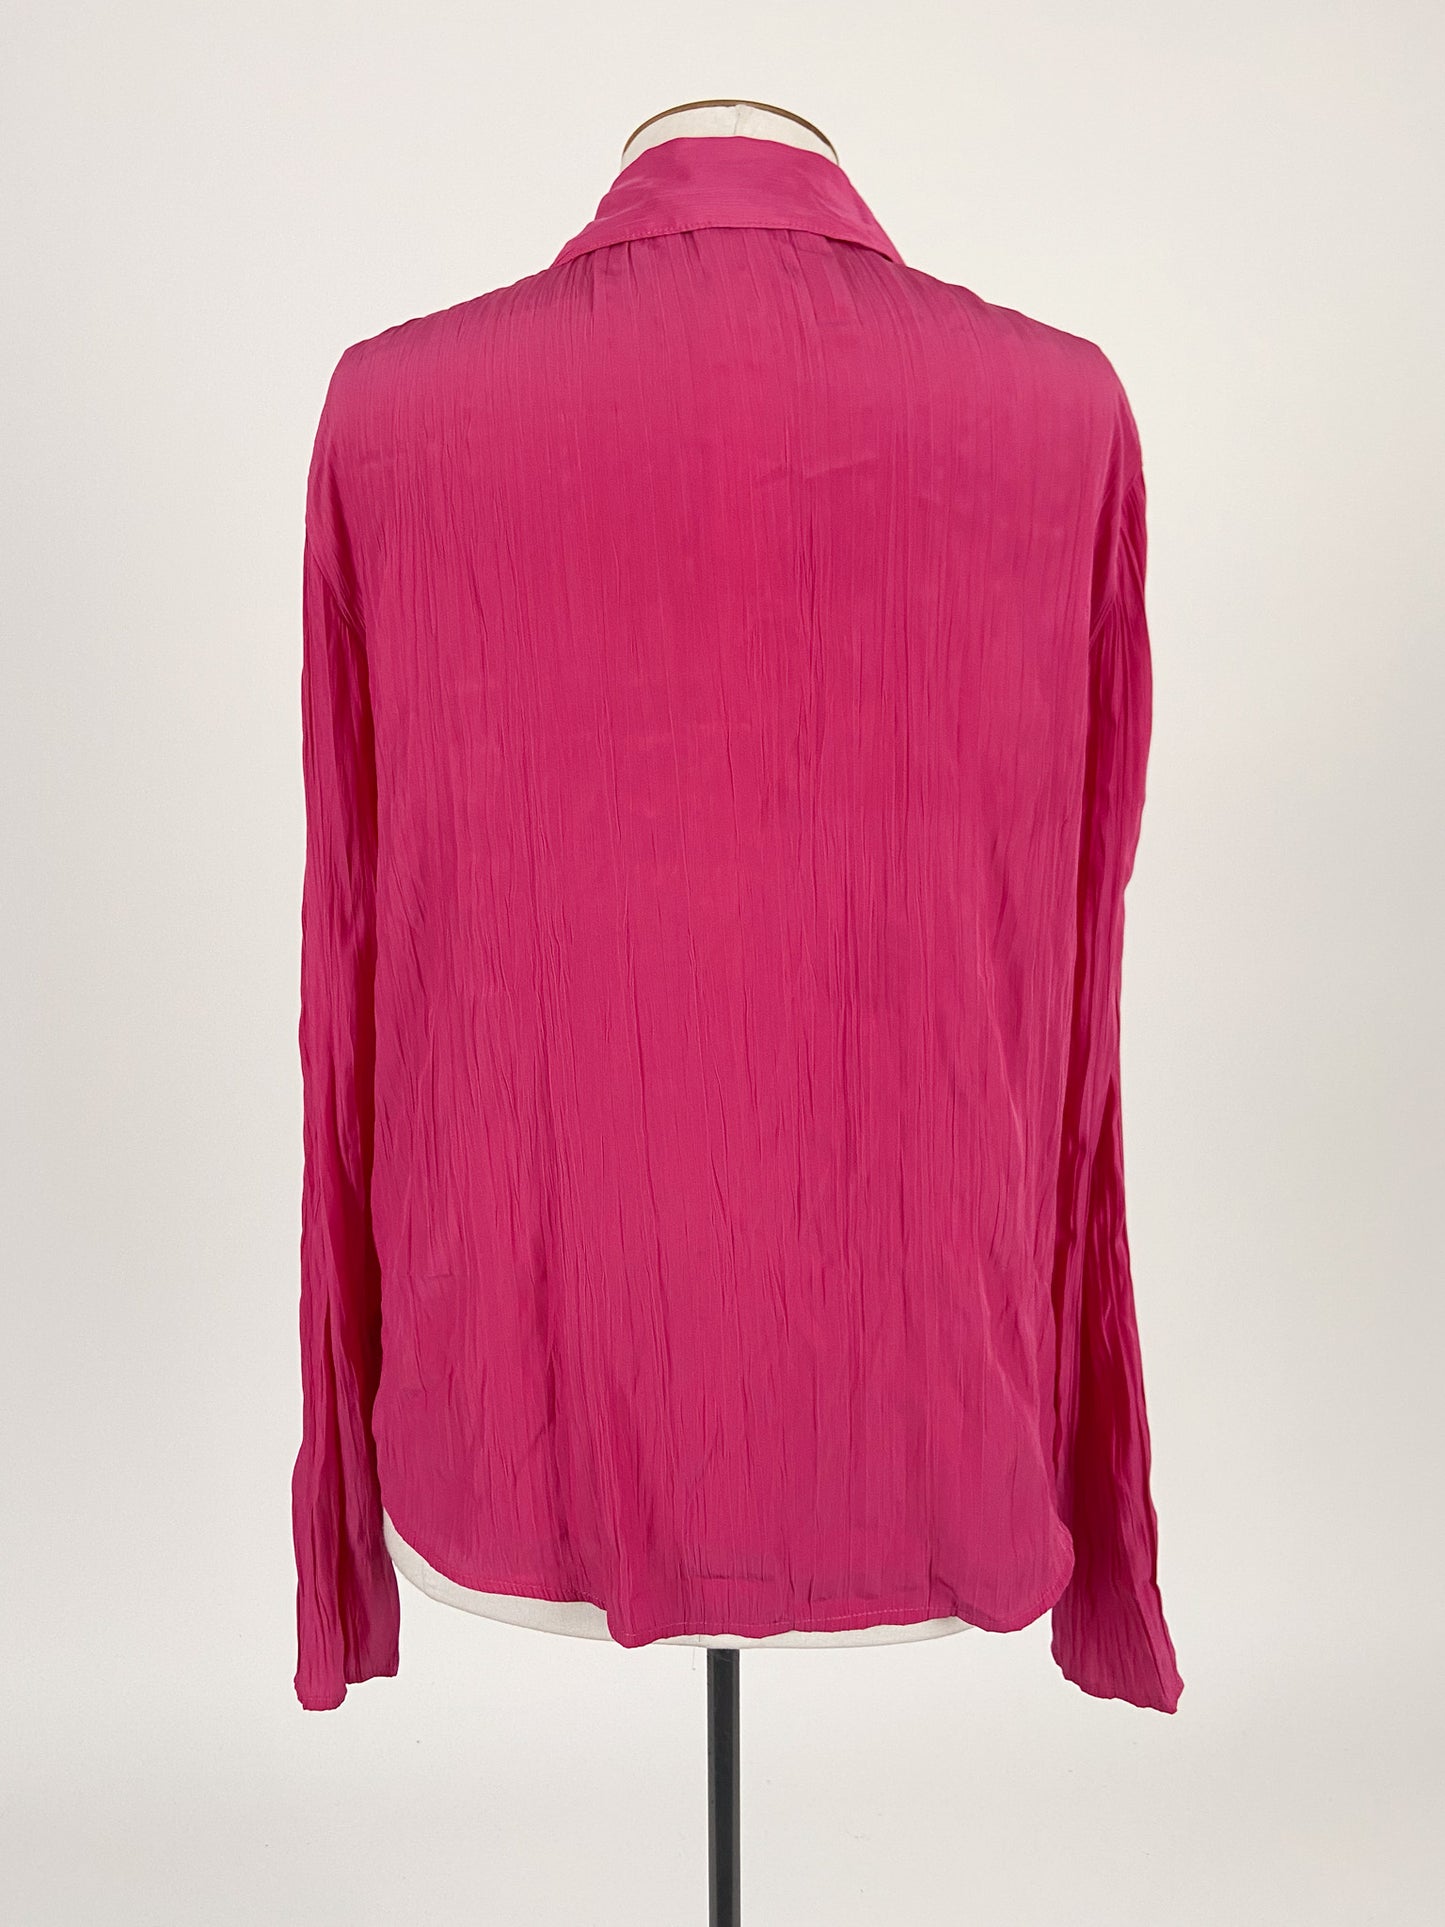 Kate Sylvester | Pink Workwear Top | Size 14